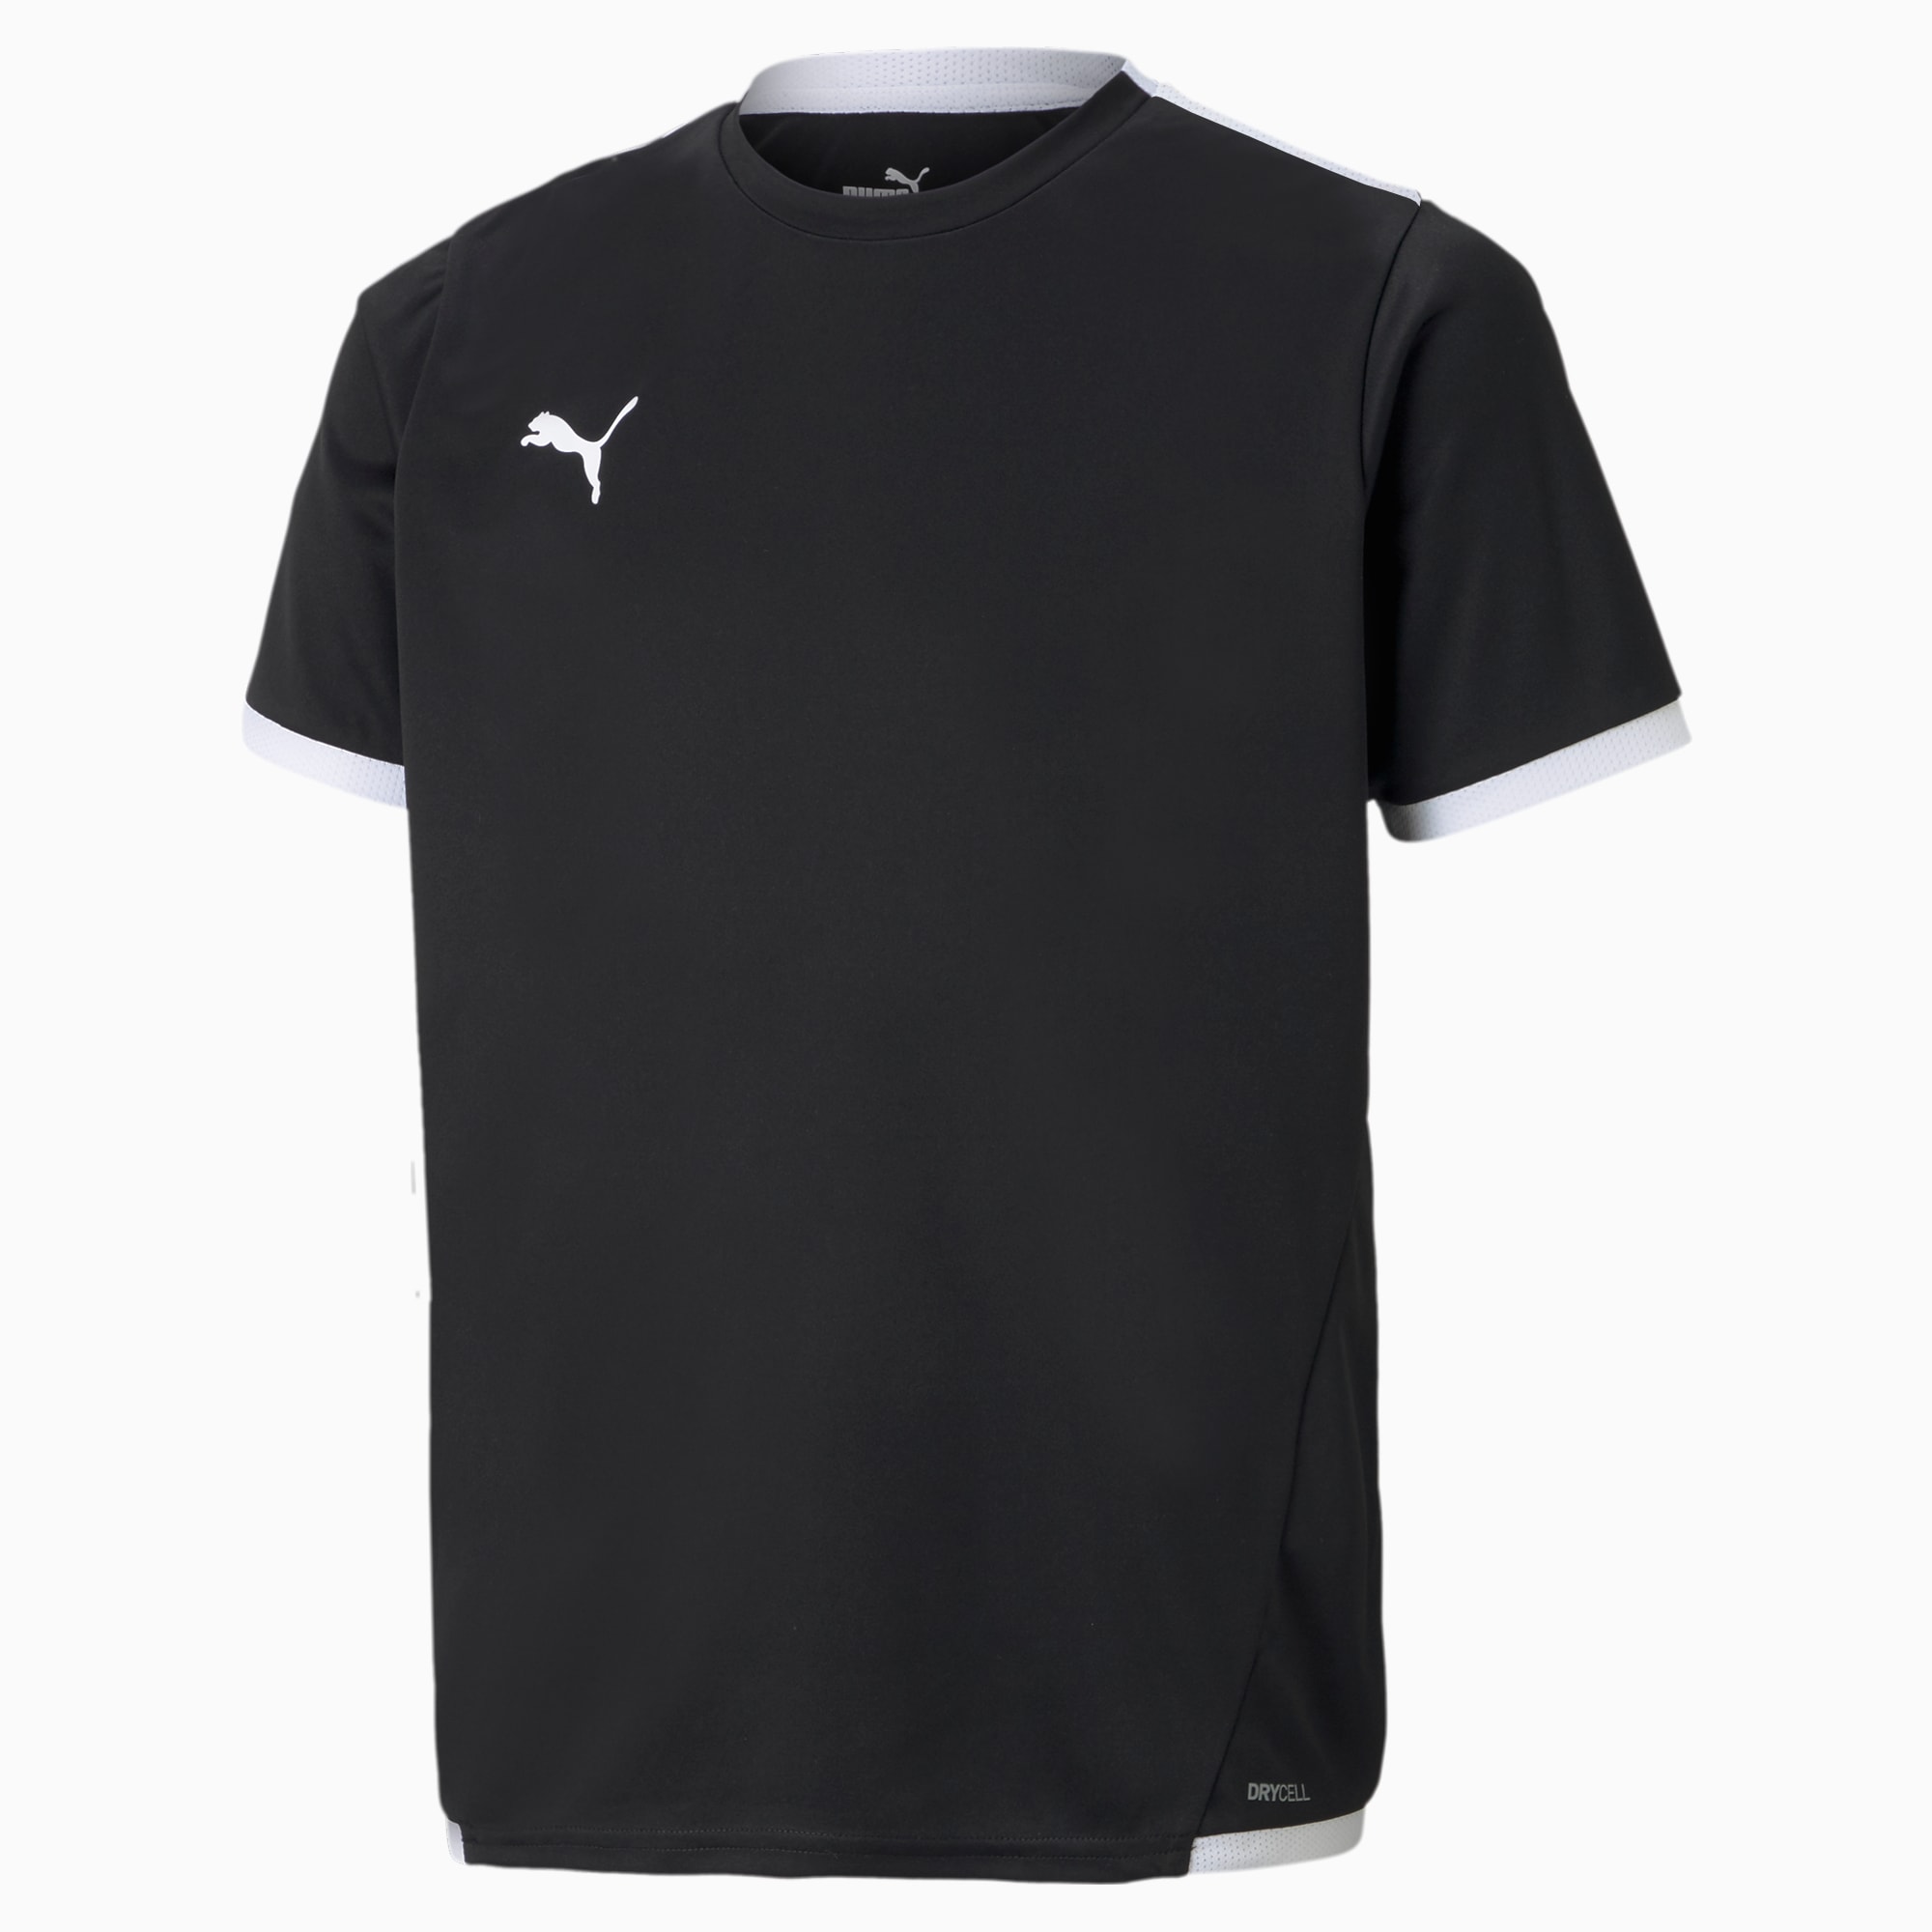 PUMA Teamliga Youth Football Jersey, Black/White, Size 104, Accessories